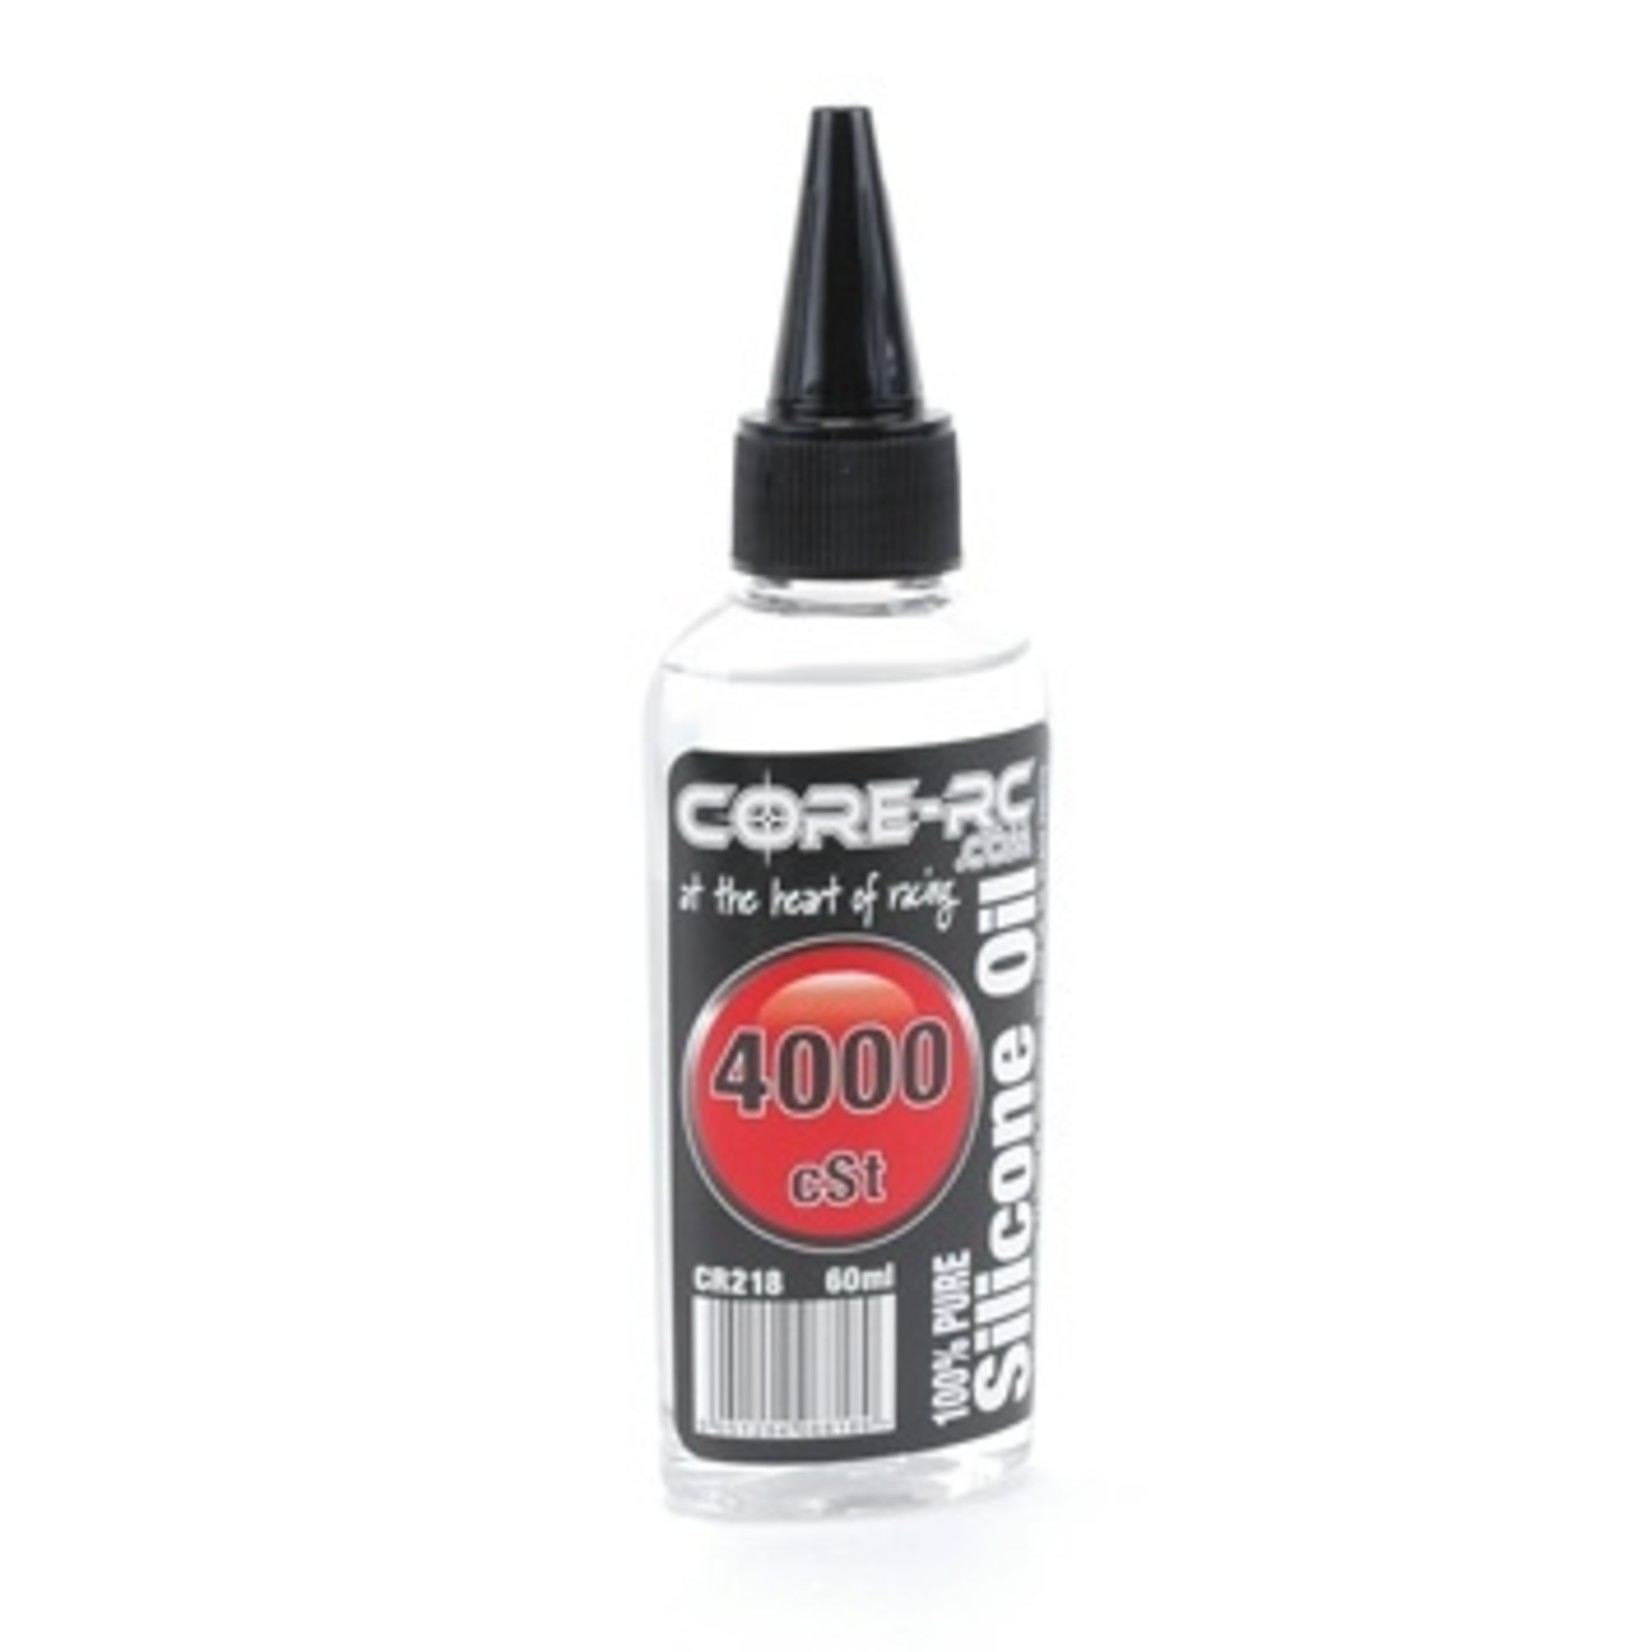 Core RC CORE RC Silicone Oil - 4000cSt - 60ml